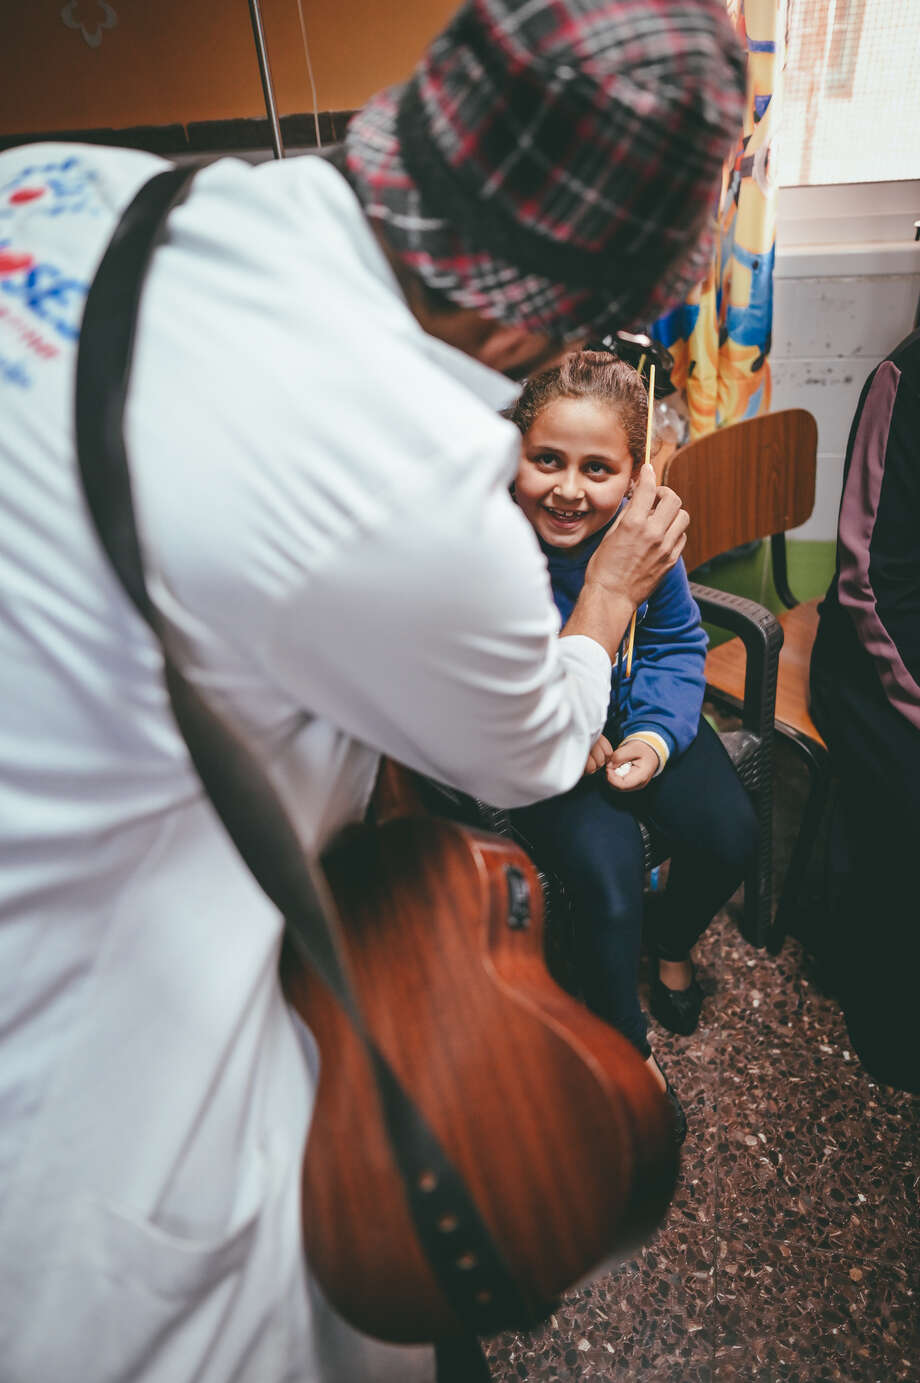 A healthcare clown spreading joy among a hospitalised child